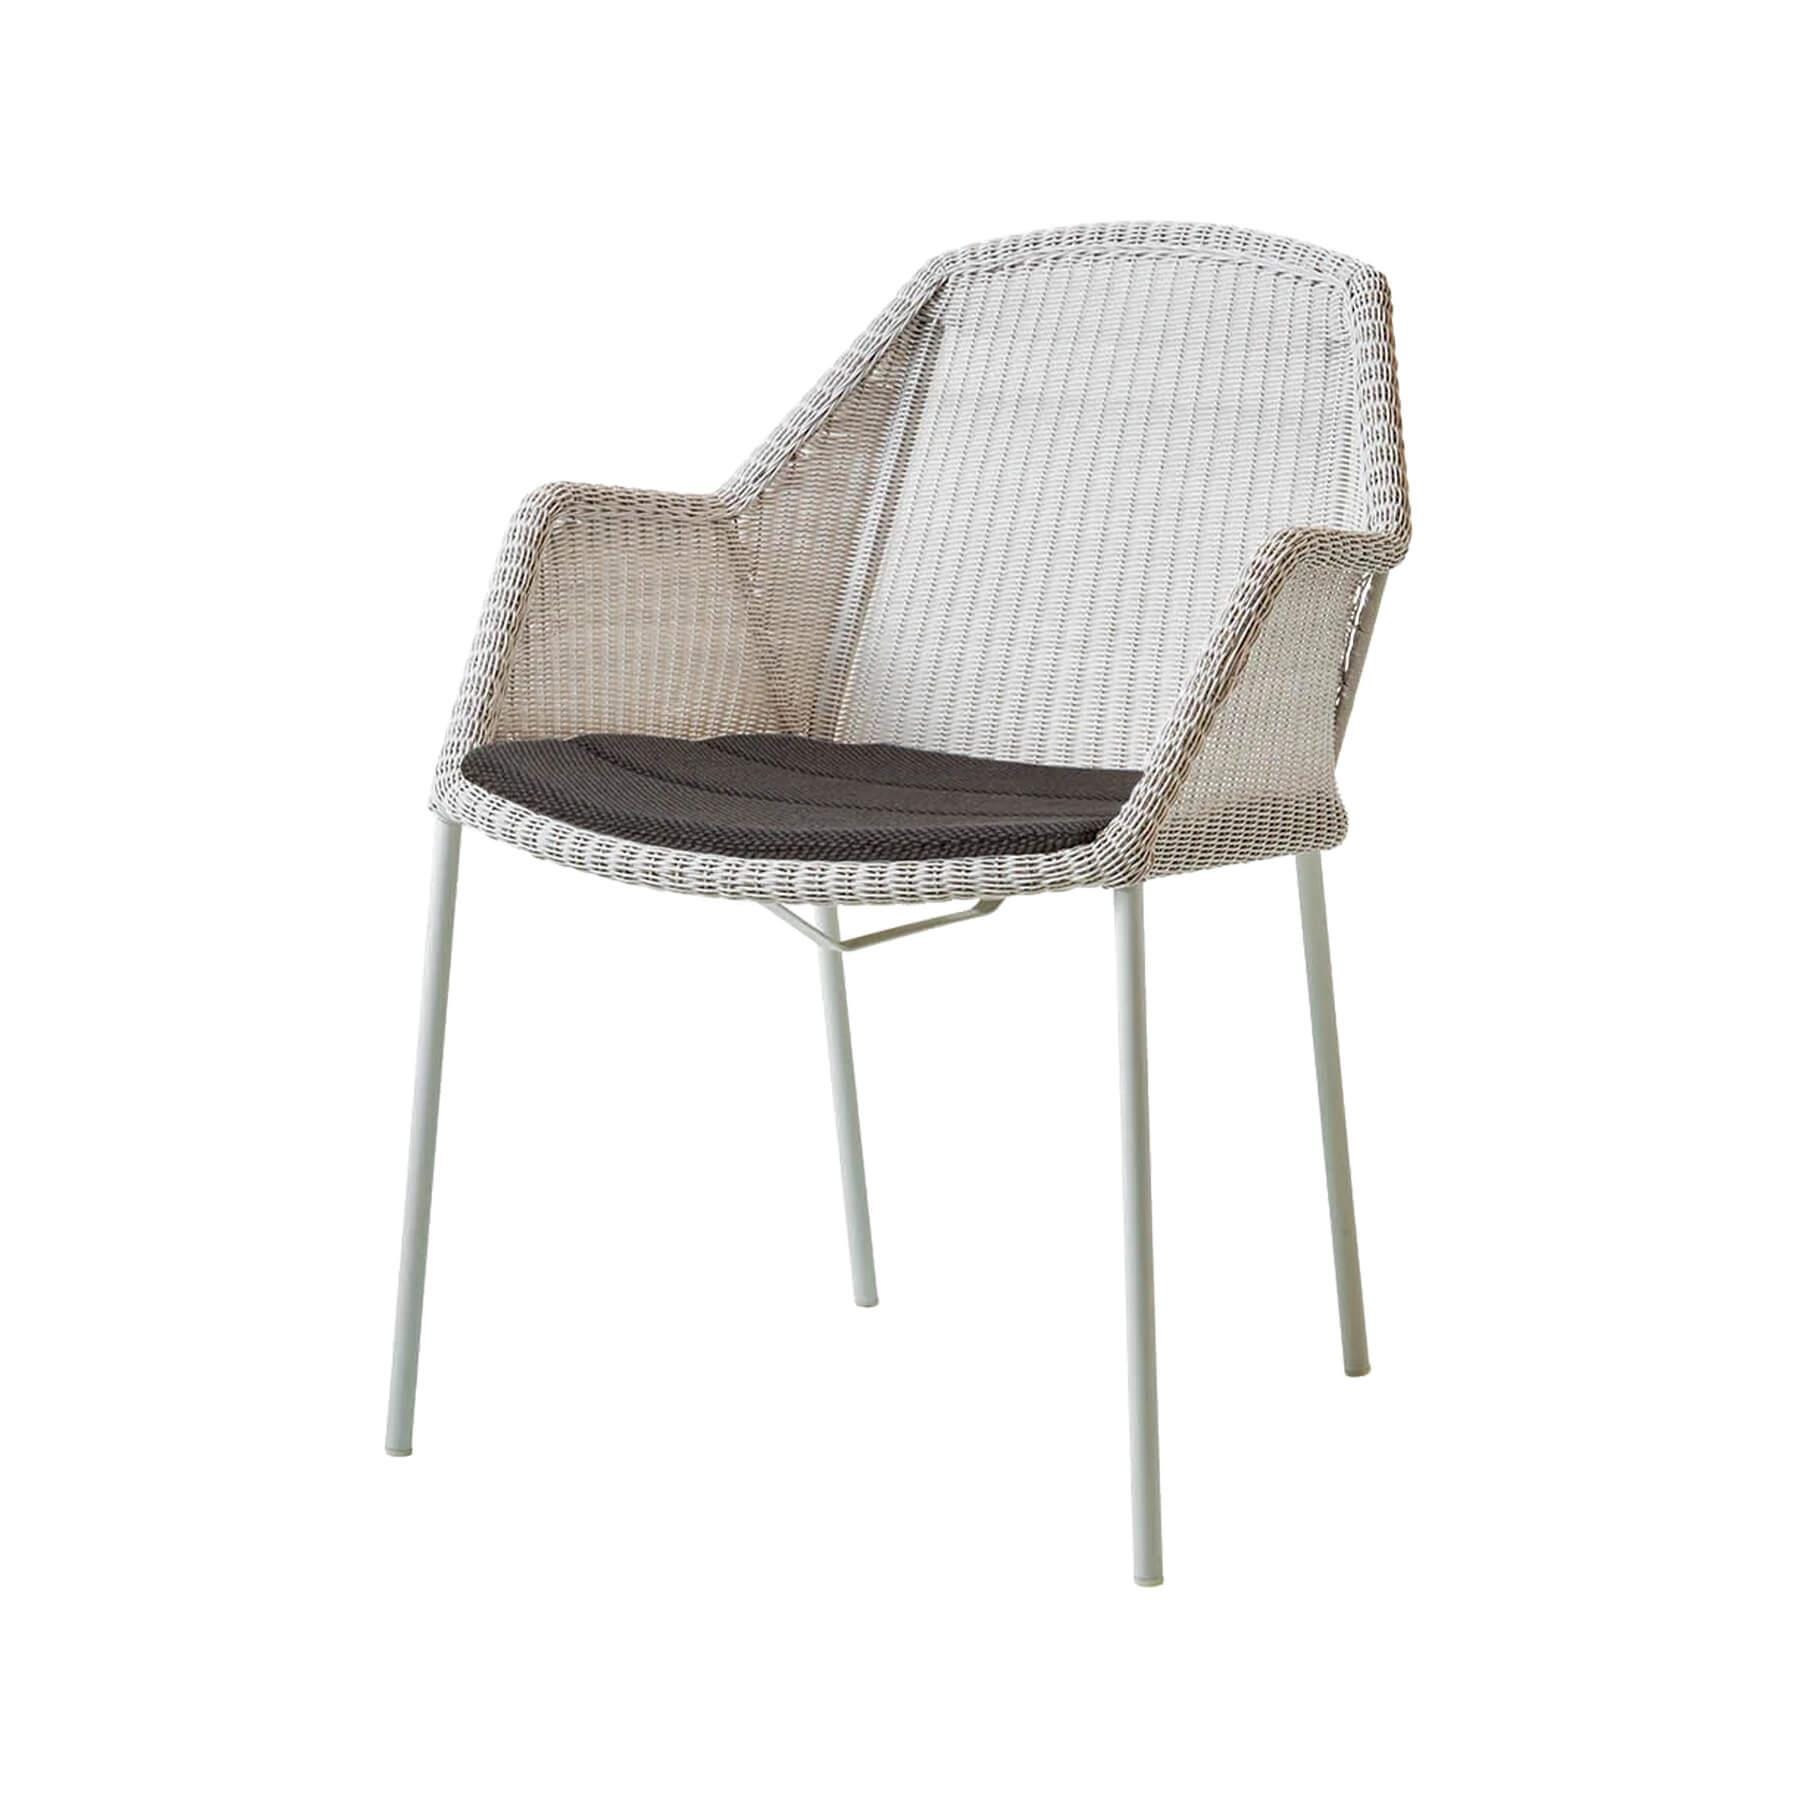 Caneline Breeze Outdoor Chair White Grey Seat Dark Grey Cushion